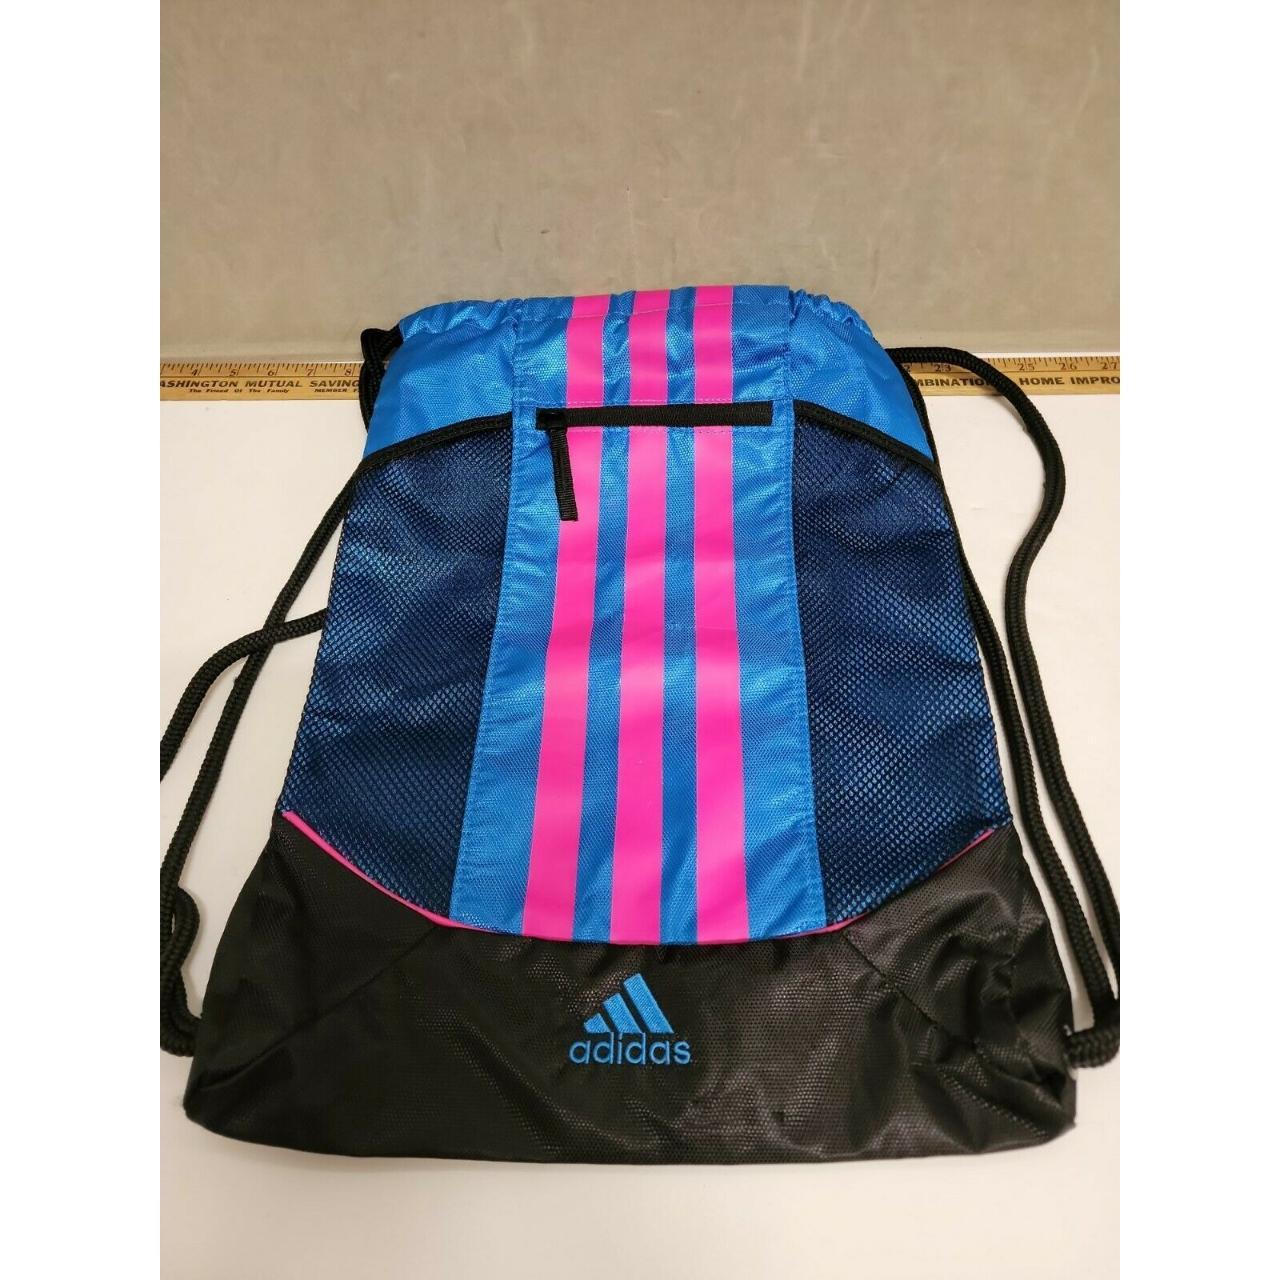 Adidas ECB England Cricket Gym Sack / Bag